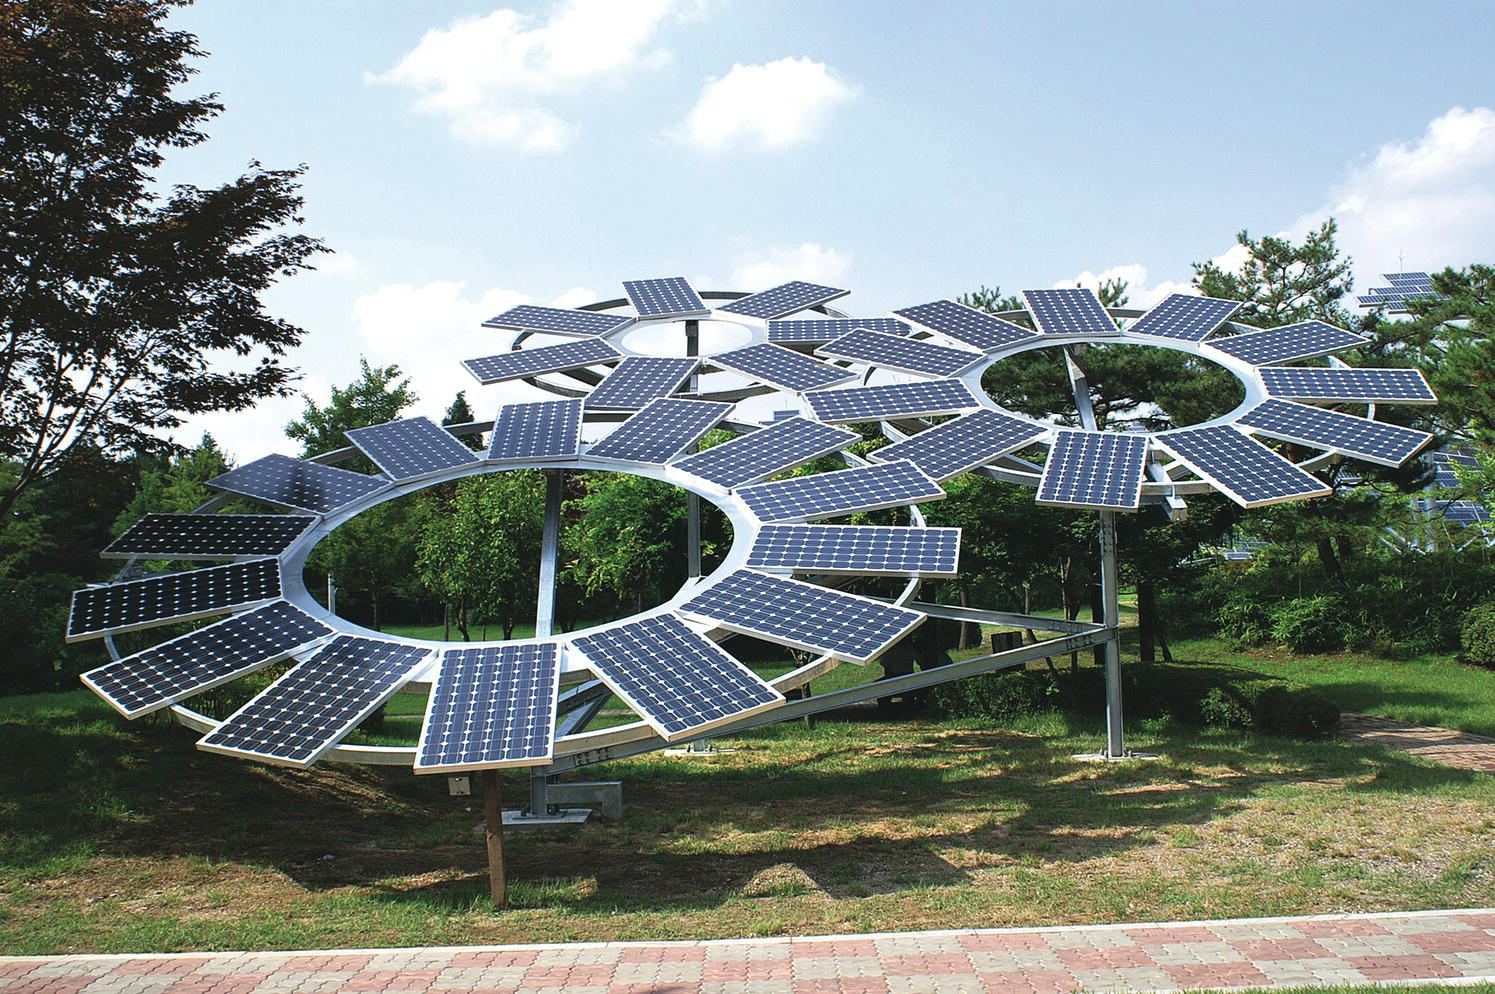 Solar panels formed as “sunflowers” in Korea.